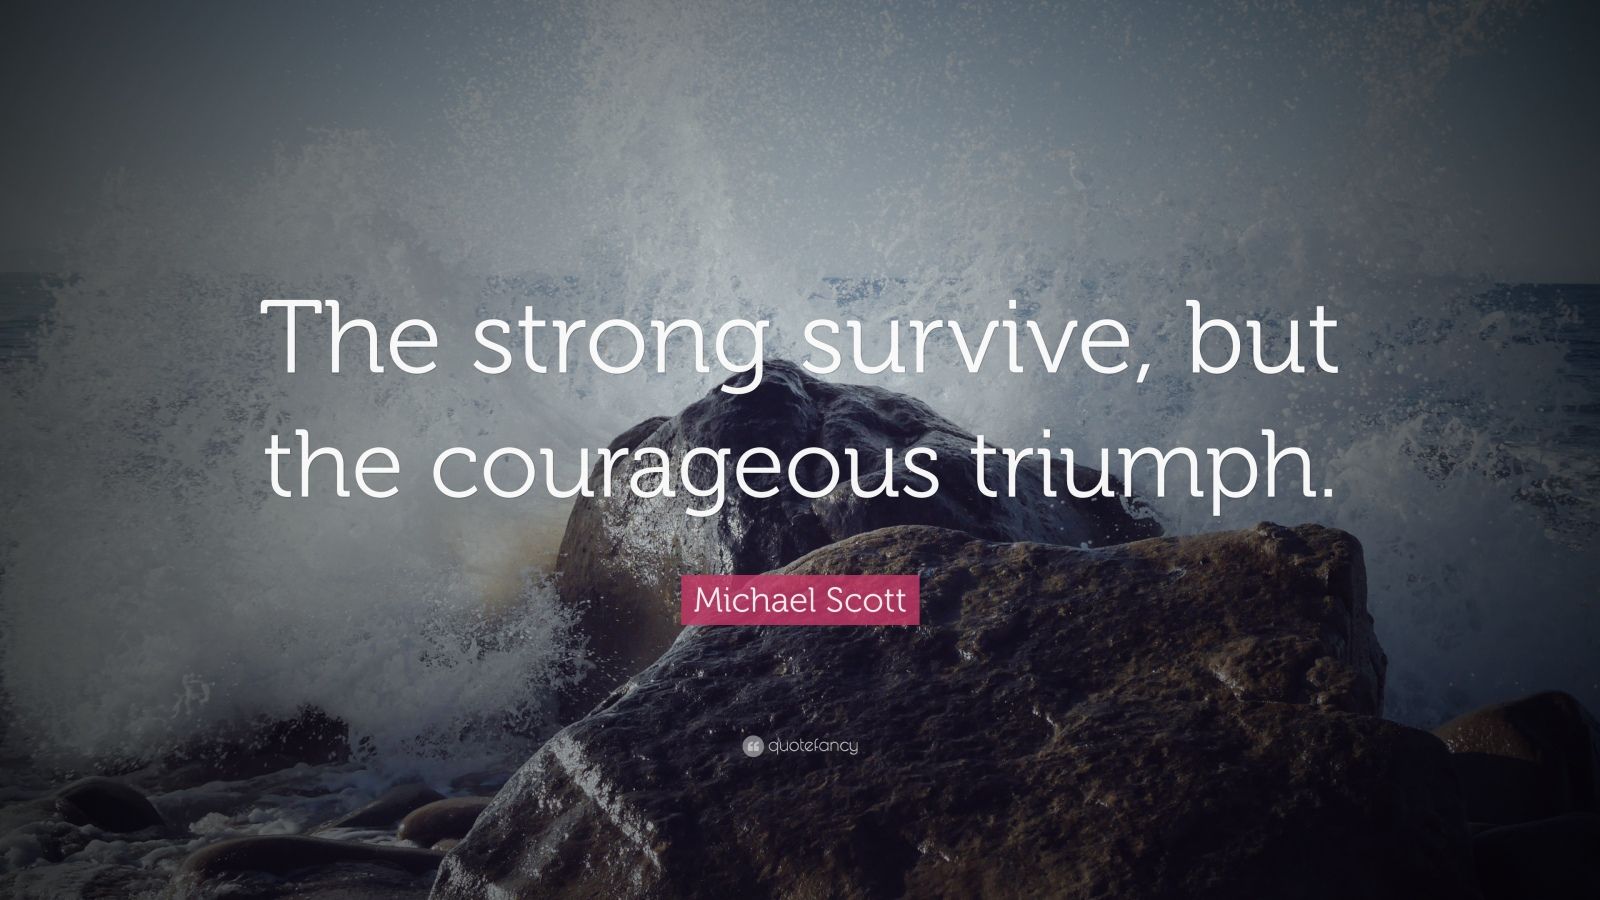 Michael Scott Quote: “The strong survive, but the courageous triumph.”